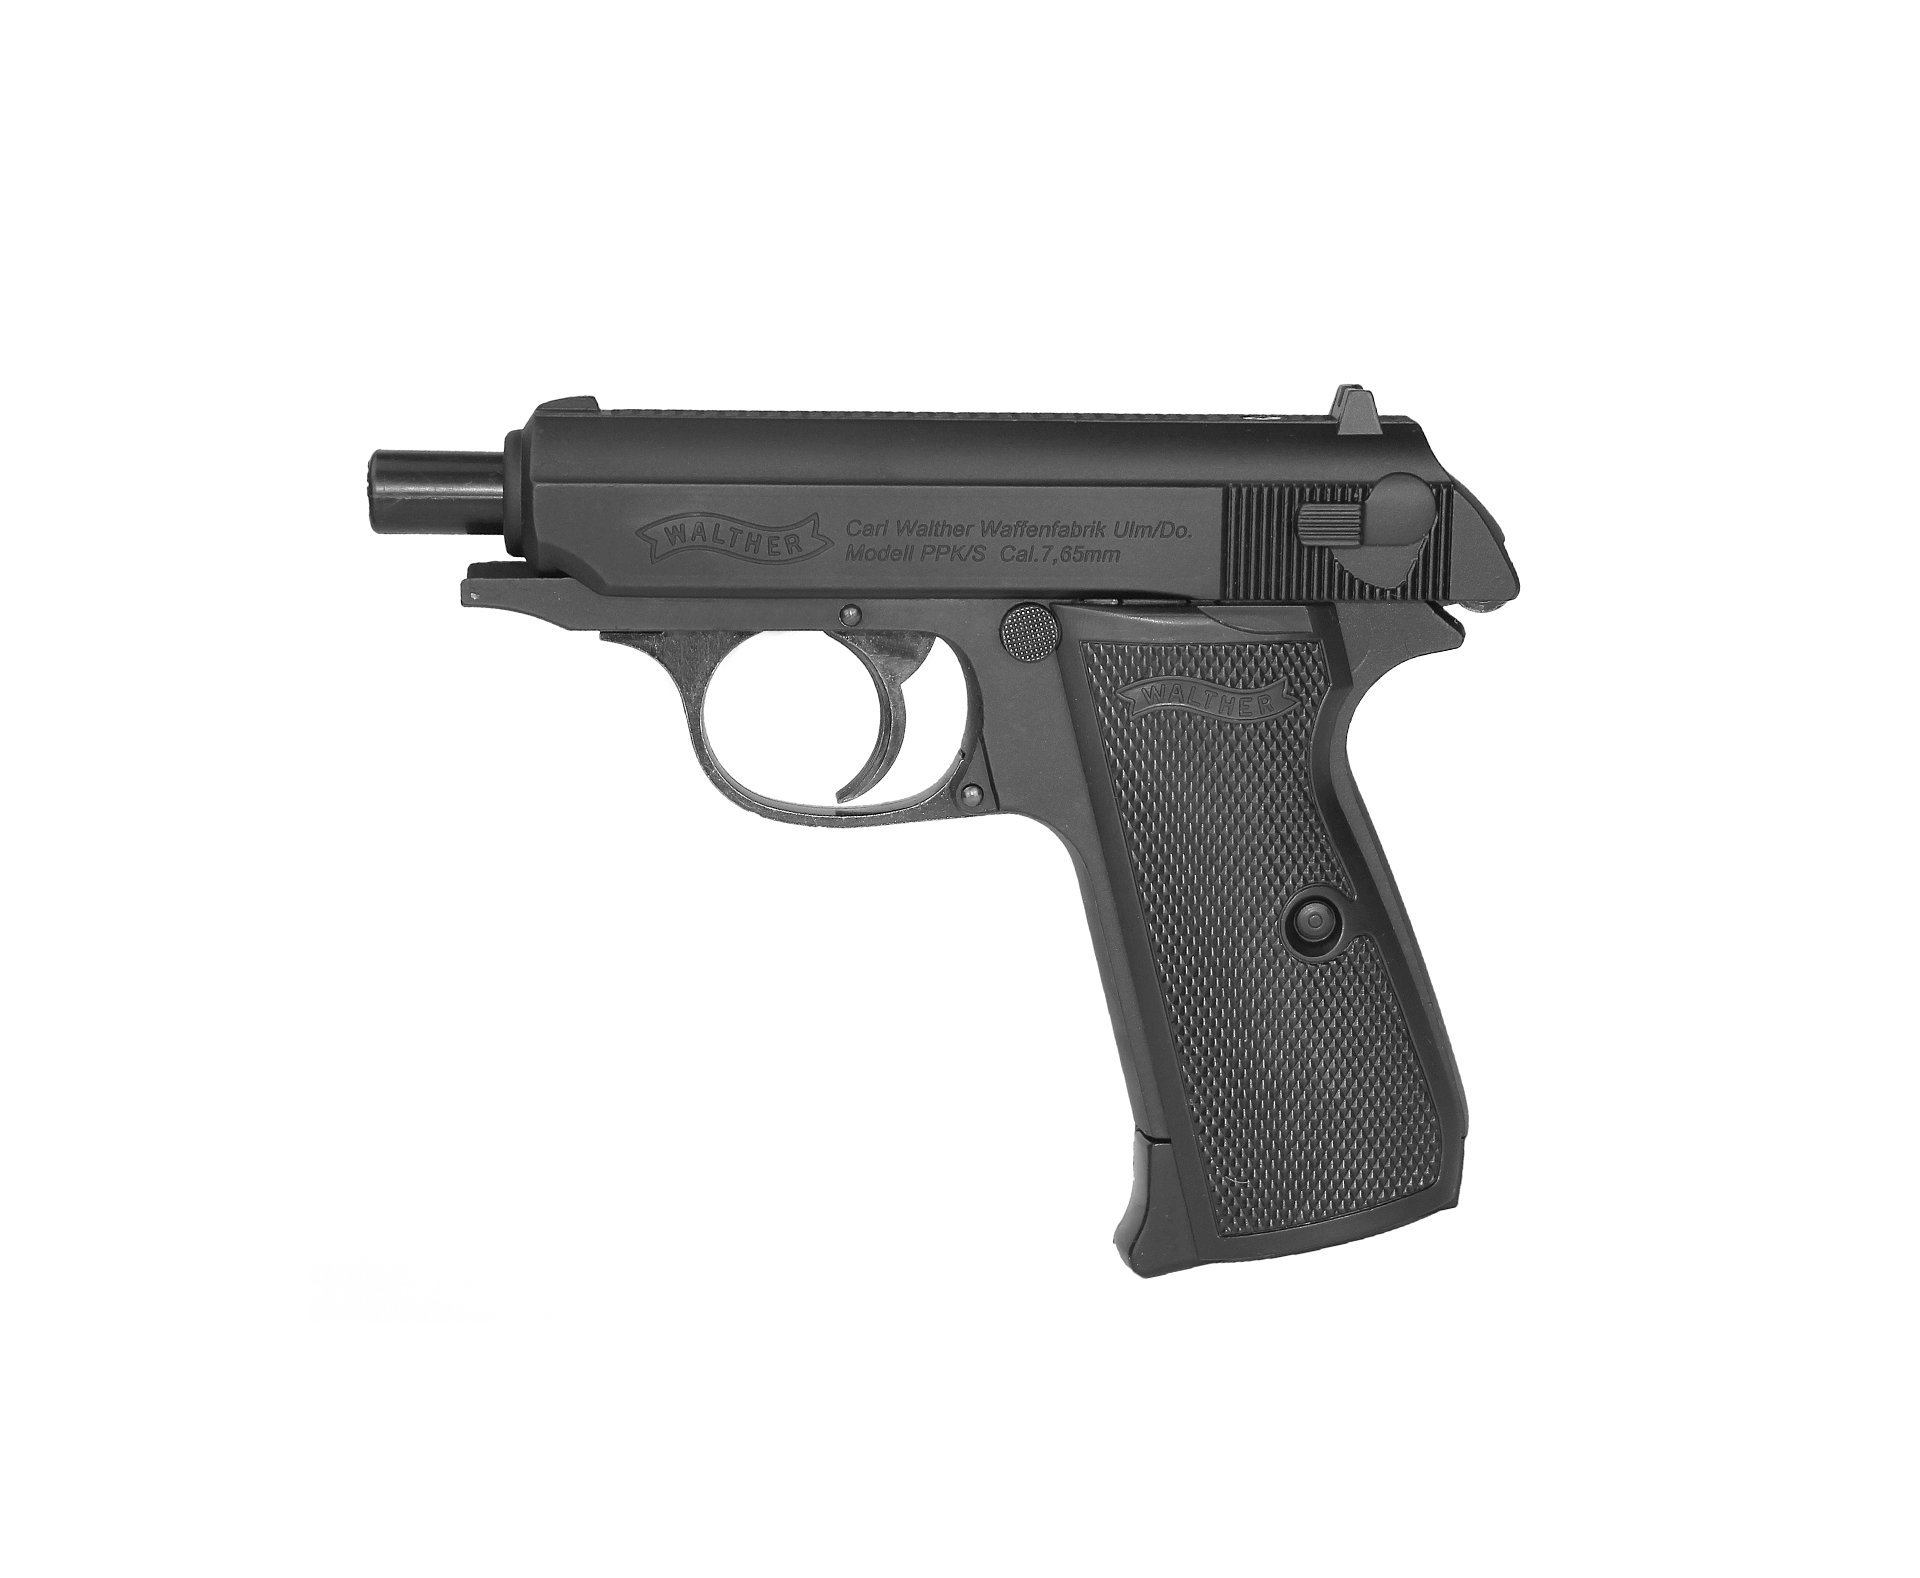 Pistola De Pressão Co2 Walther Ppk/s Blowback 4,5mm